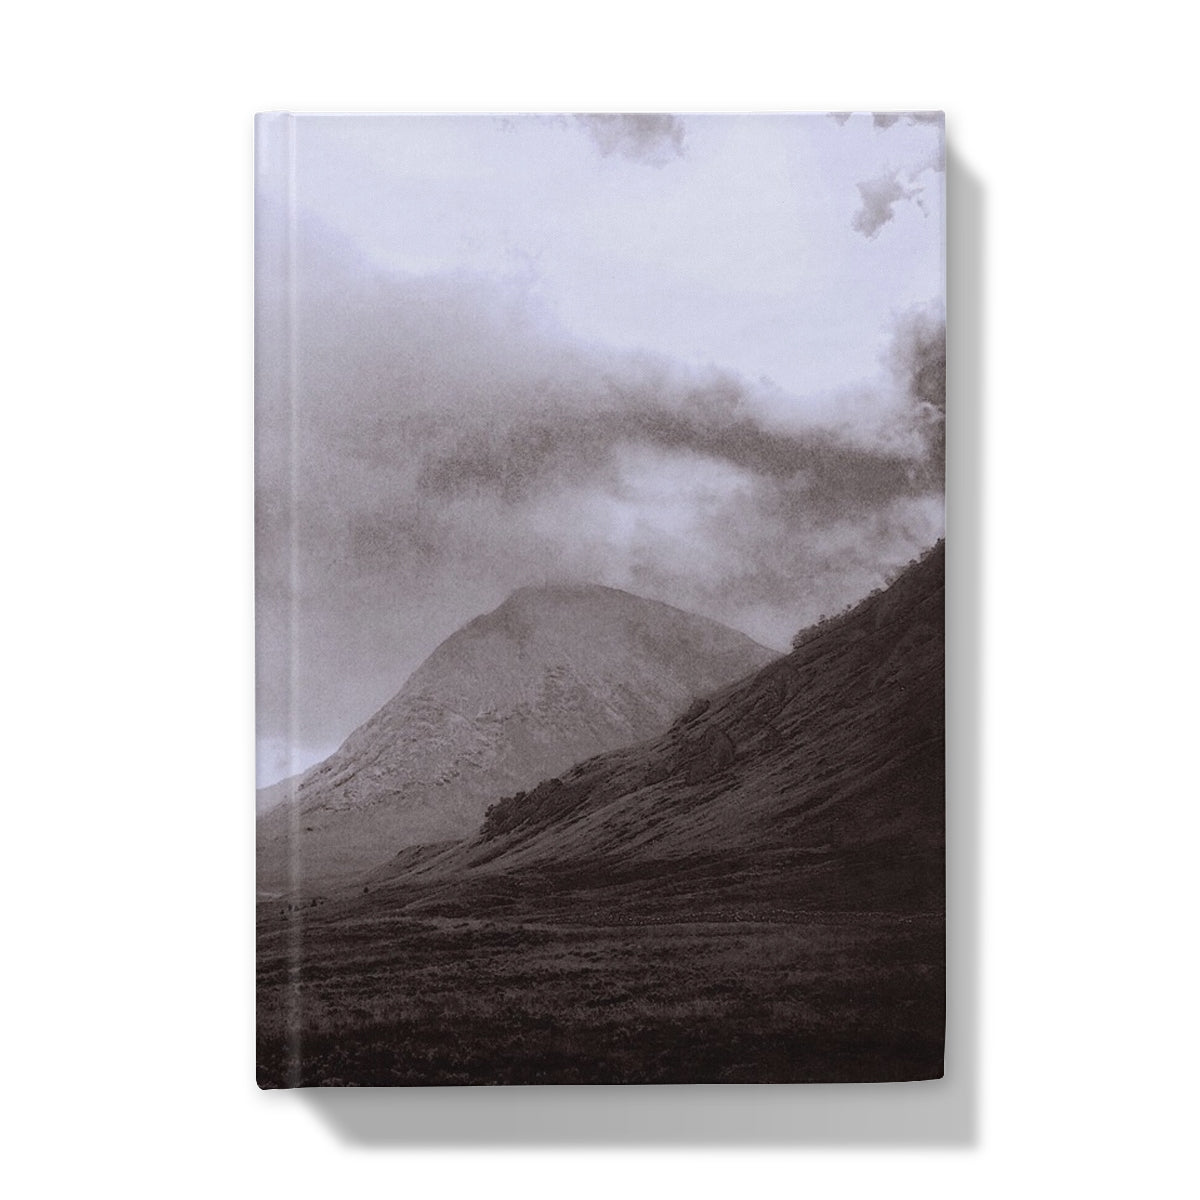 Glencoe Mist Art Gifts Hardback Journal-Journals & Notebooks-Glencoe Art Gallery-A5-Plain-Paintings, Prints, Homeware, Art Gifts From Scotland By Scottish Artist Kevin Hunter